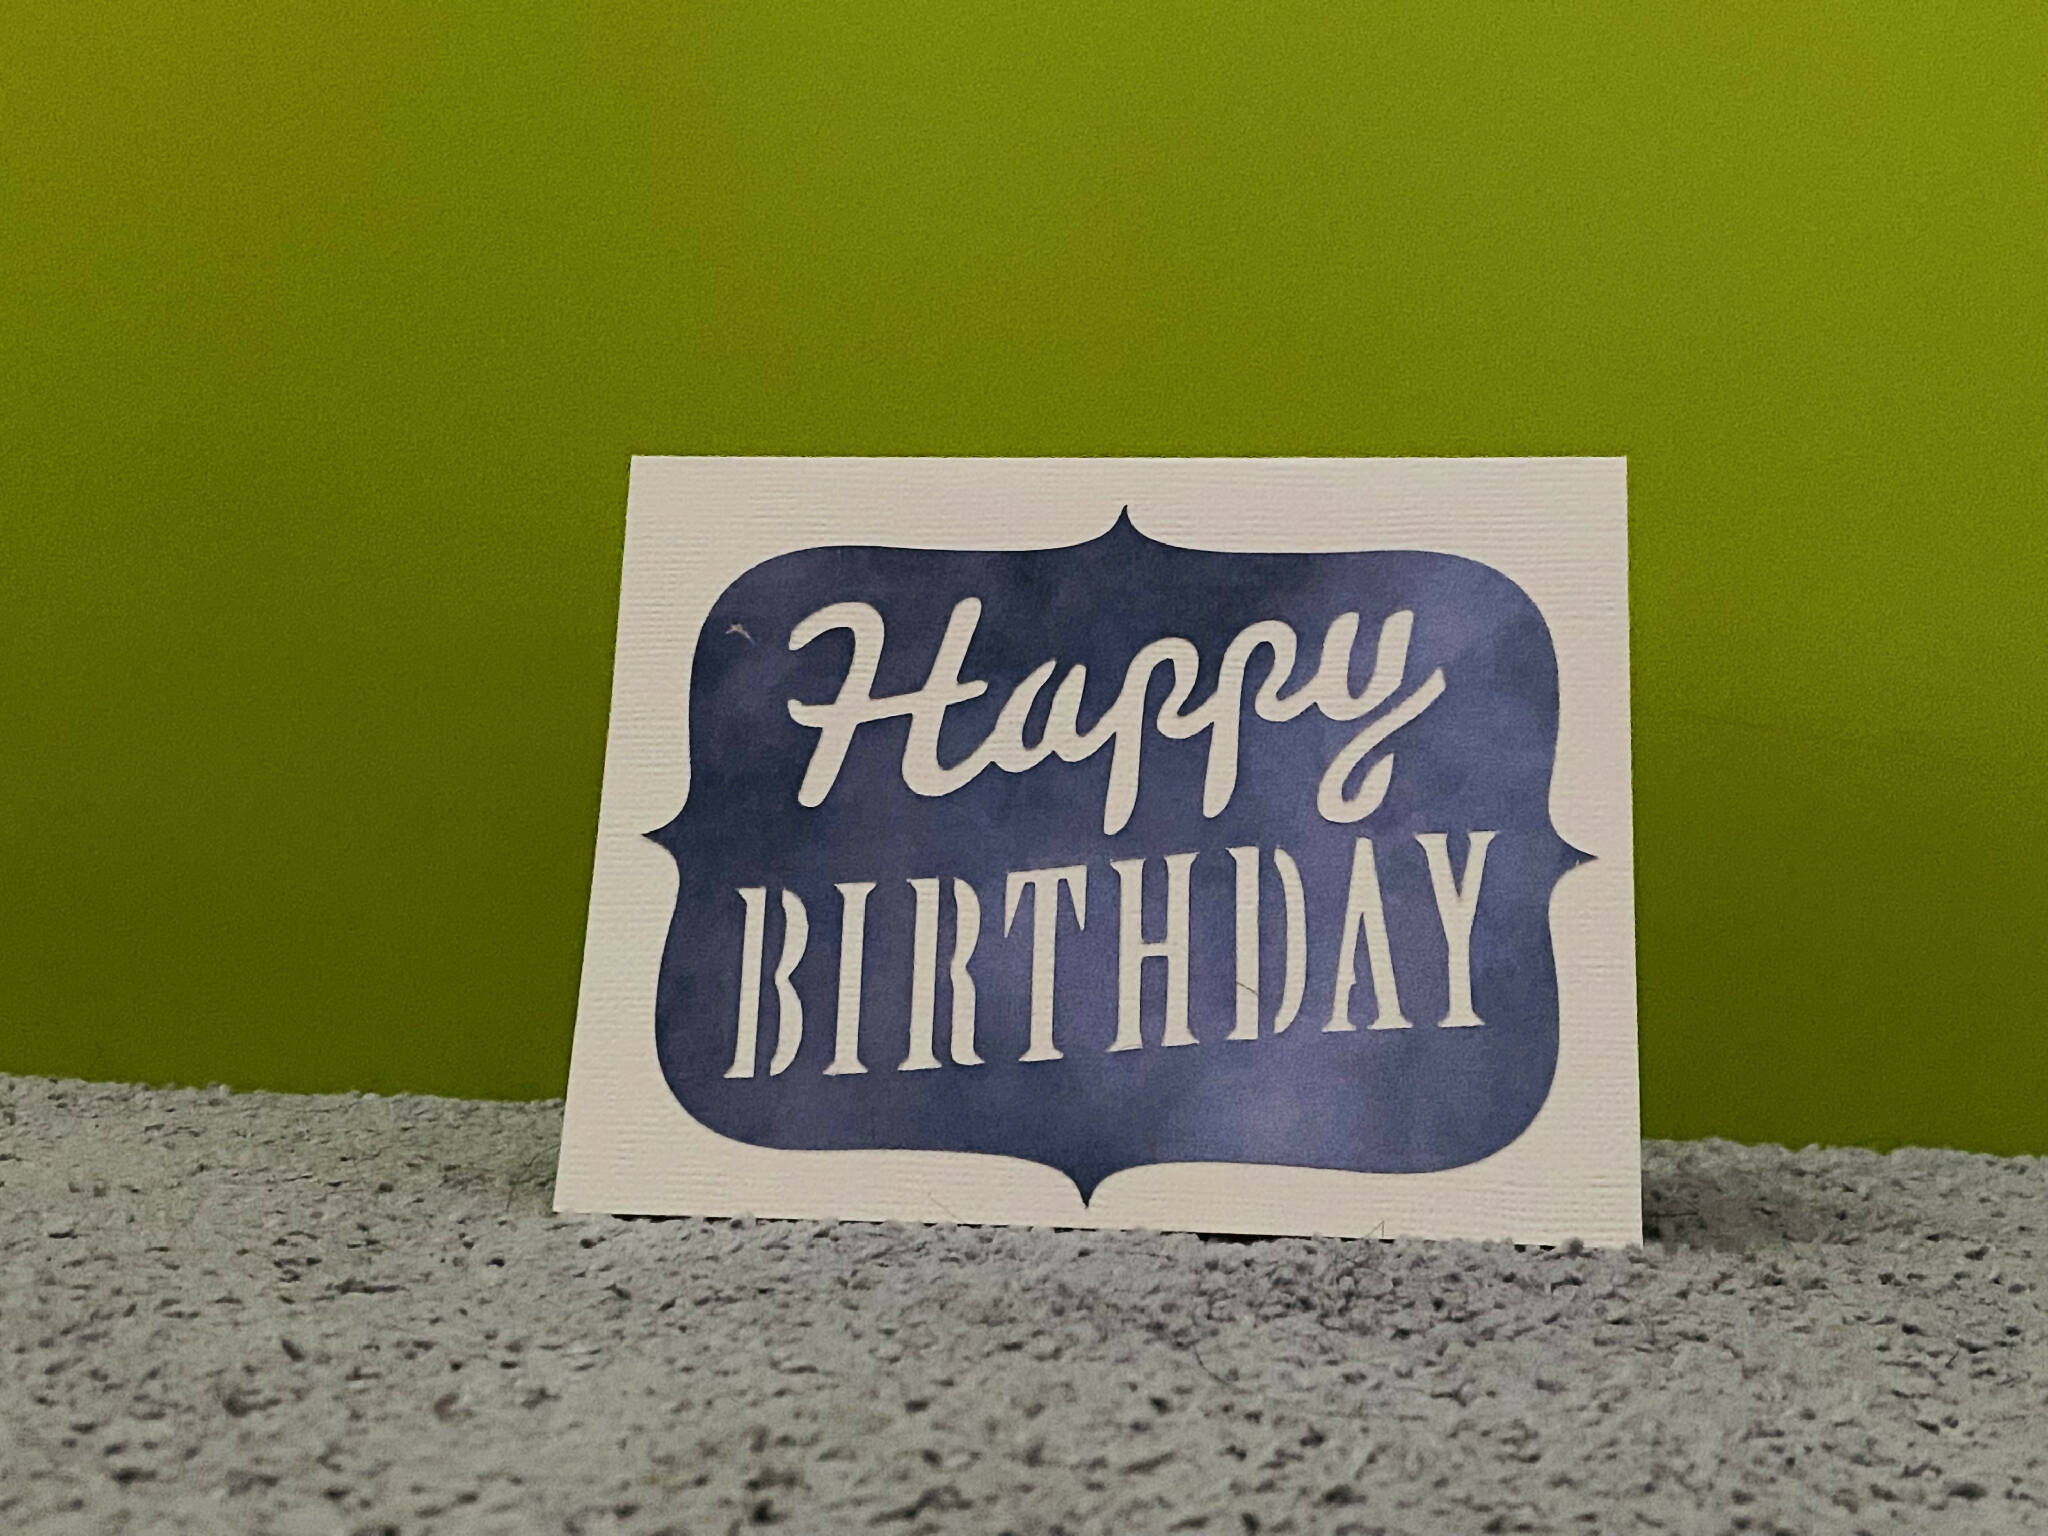 Happy birthday card - bluey purple